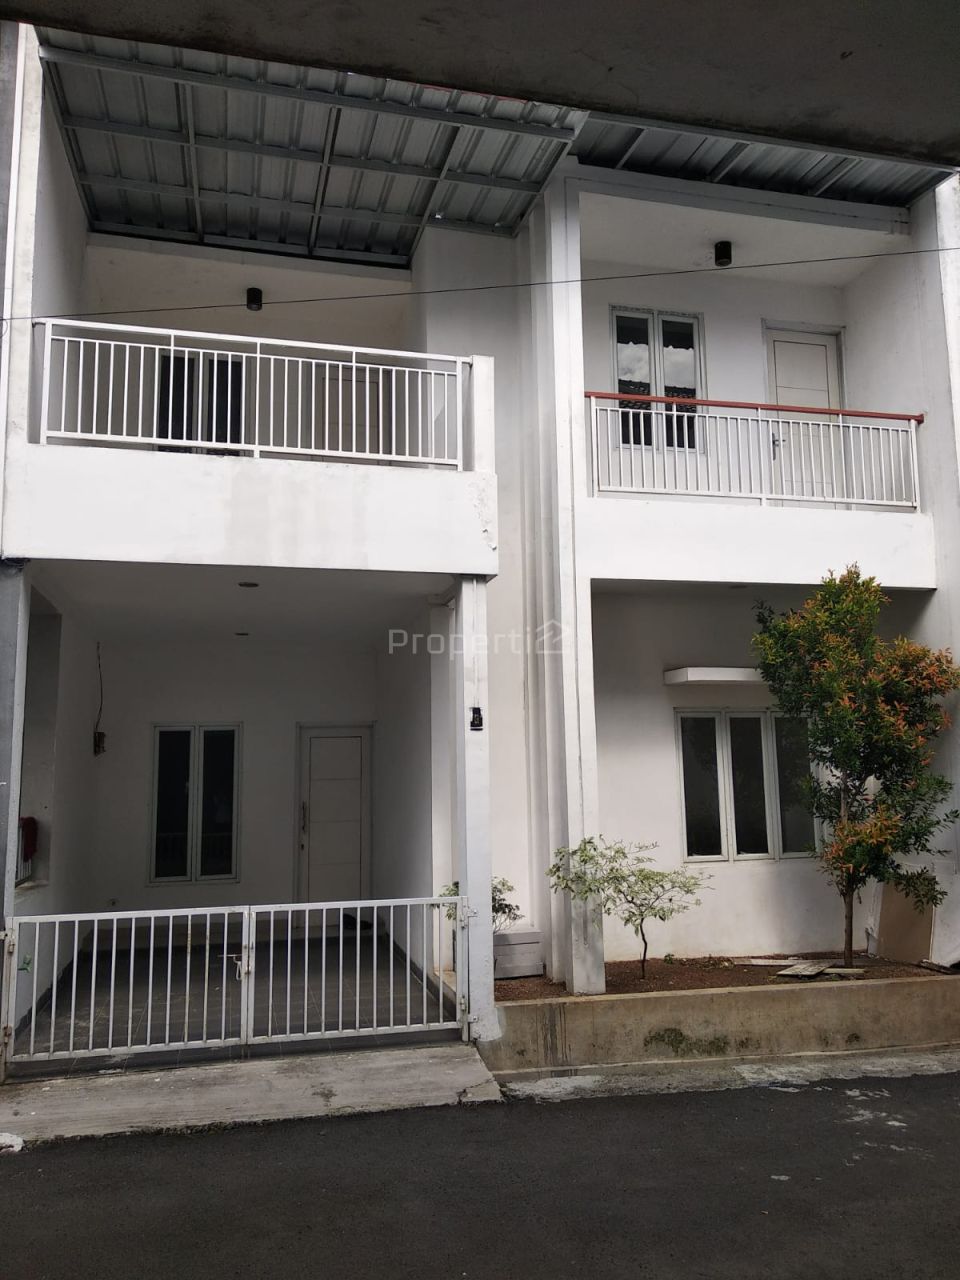 New House in Kedaung, South Tangerang City, Banten